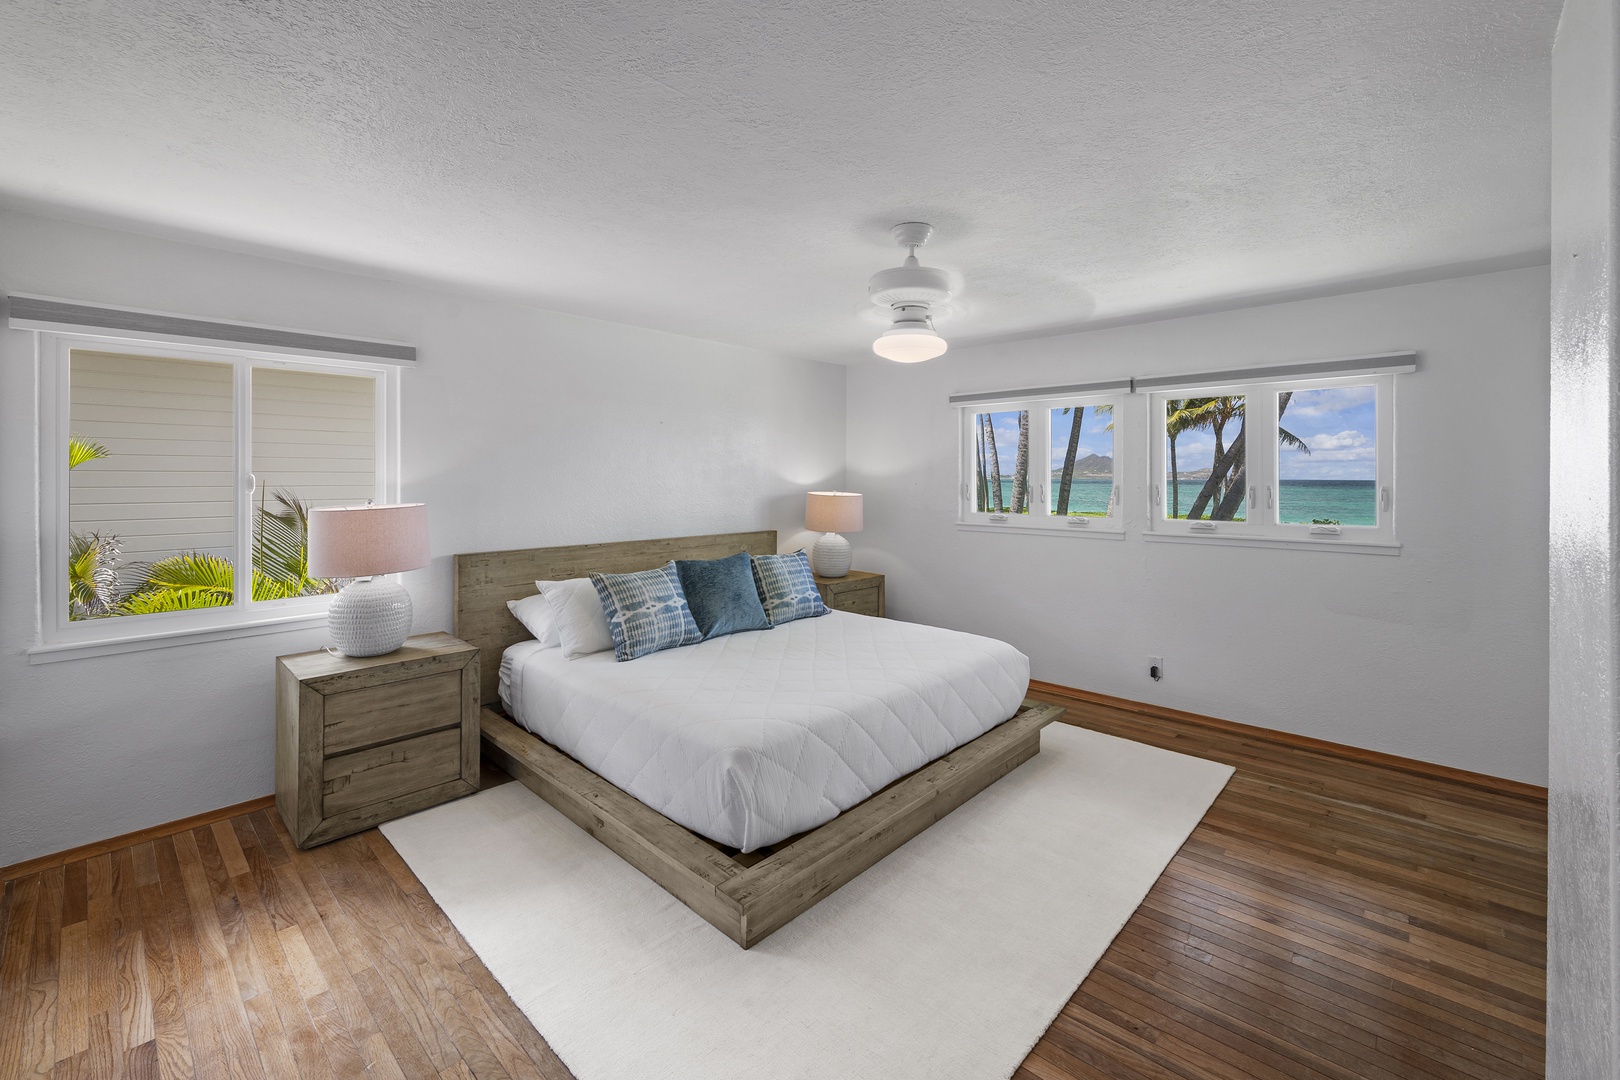 Kailua Vacation Rentals, Kailua Hale Kahakai - Guest Bedroom 2 boasts a king bed and ocean views